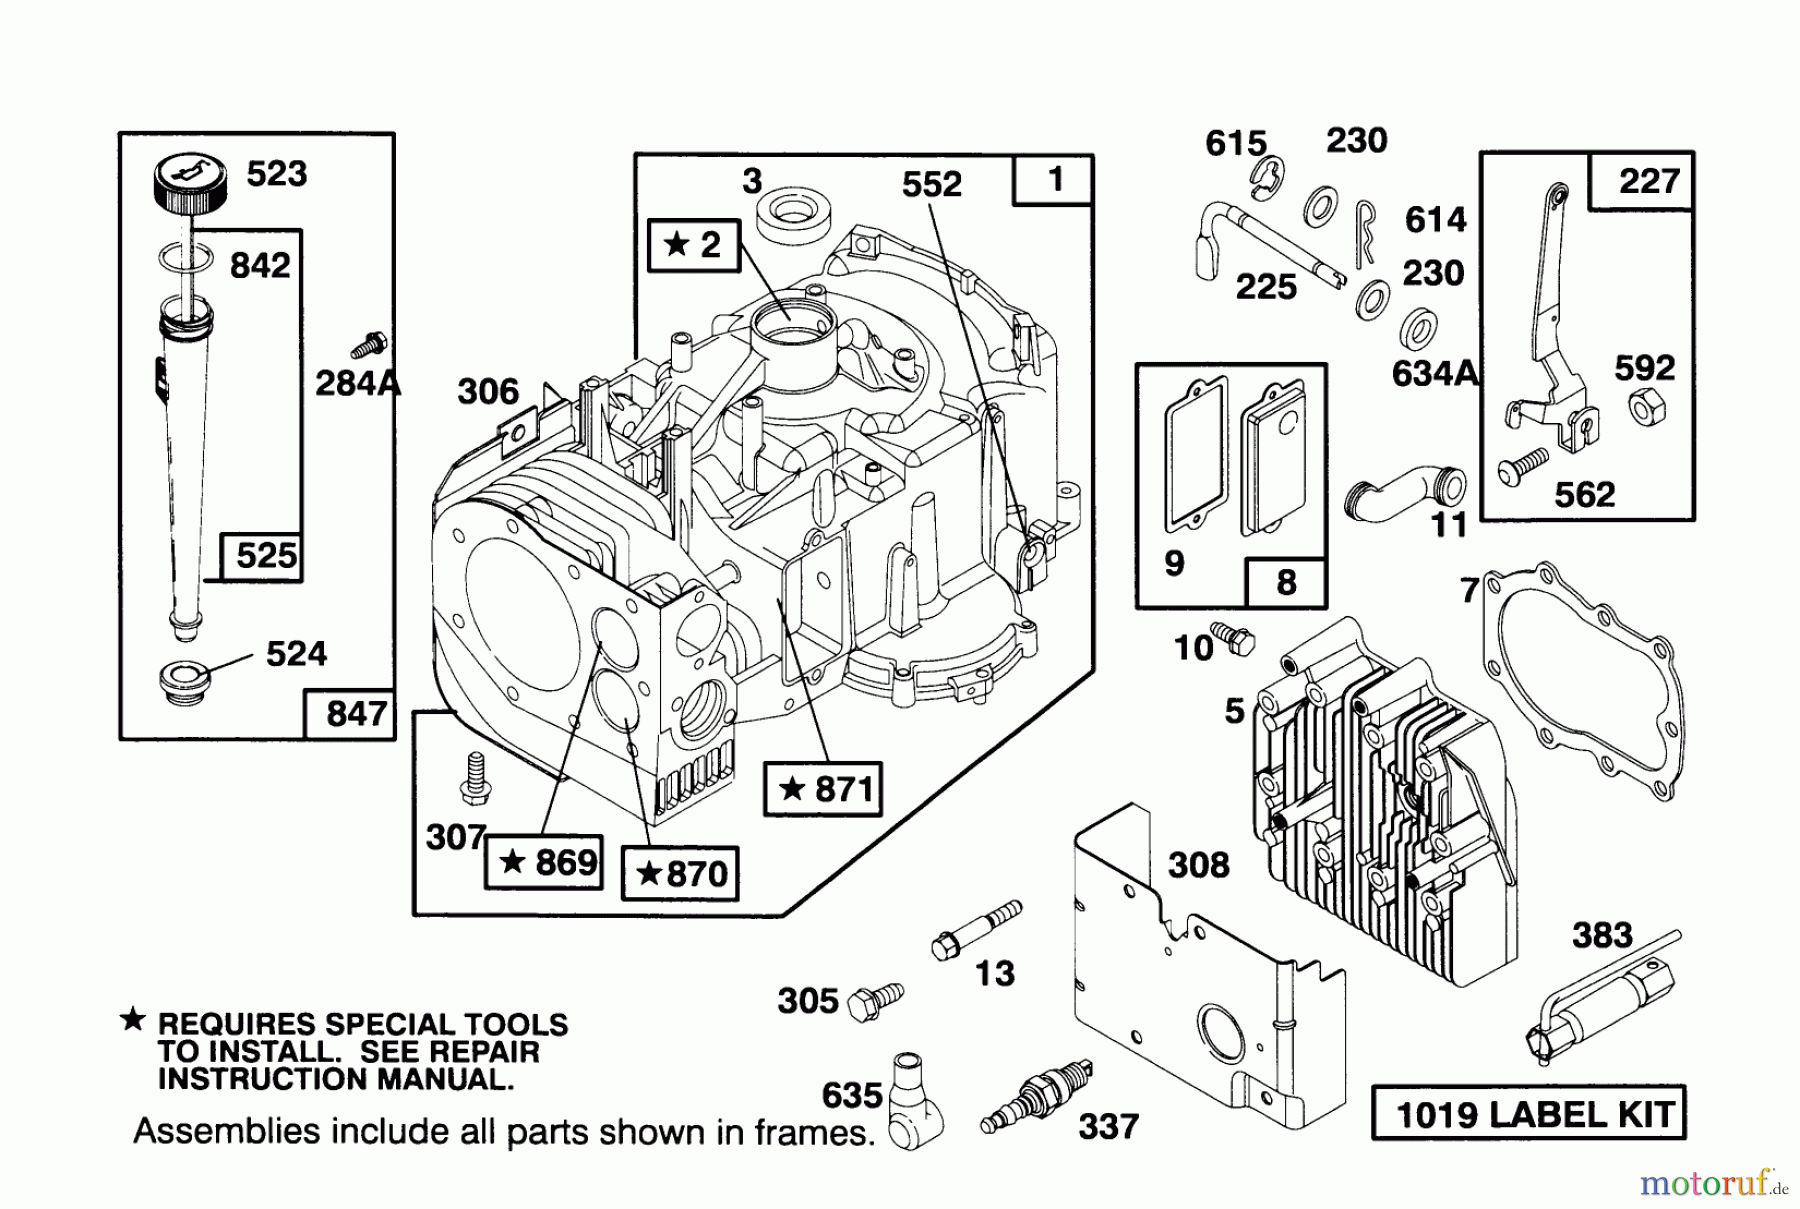  Toro Neu Mowers, Lawn & Garden Tractor Seite 1 71184 (12-38XL) - Toro 12-38XL Lawn Tractor, 1995 (5910001-5999999) ENGINE BRIGGS & STRATTON MODEL 286707-0453-01 #1